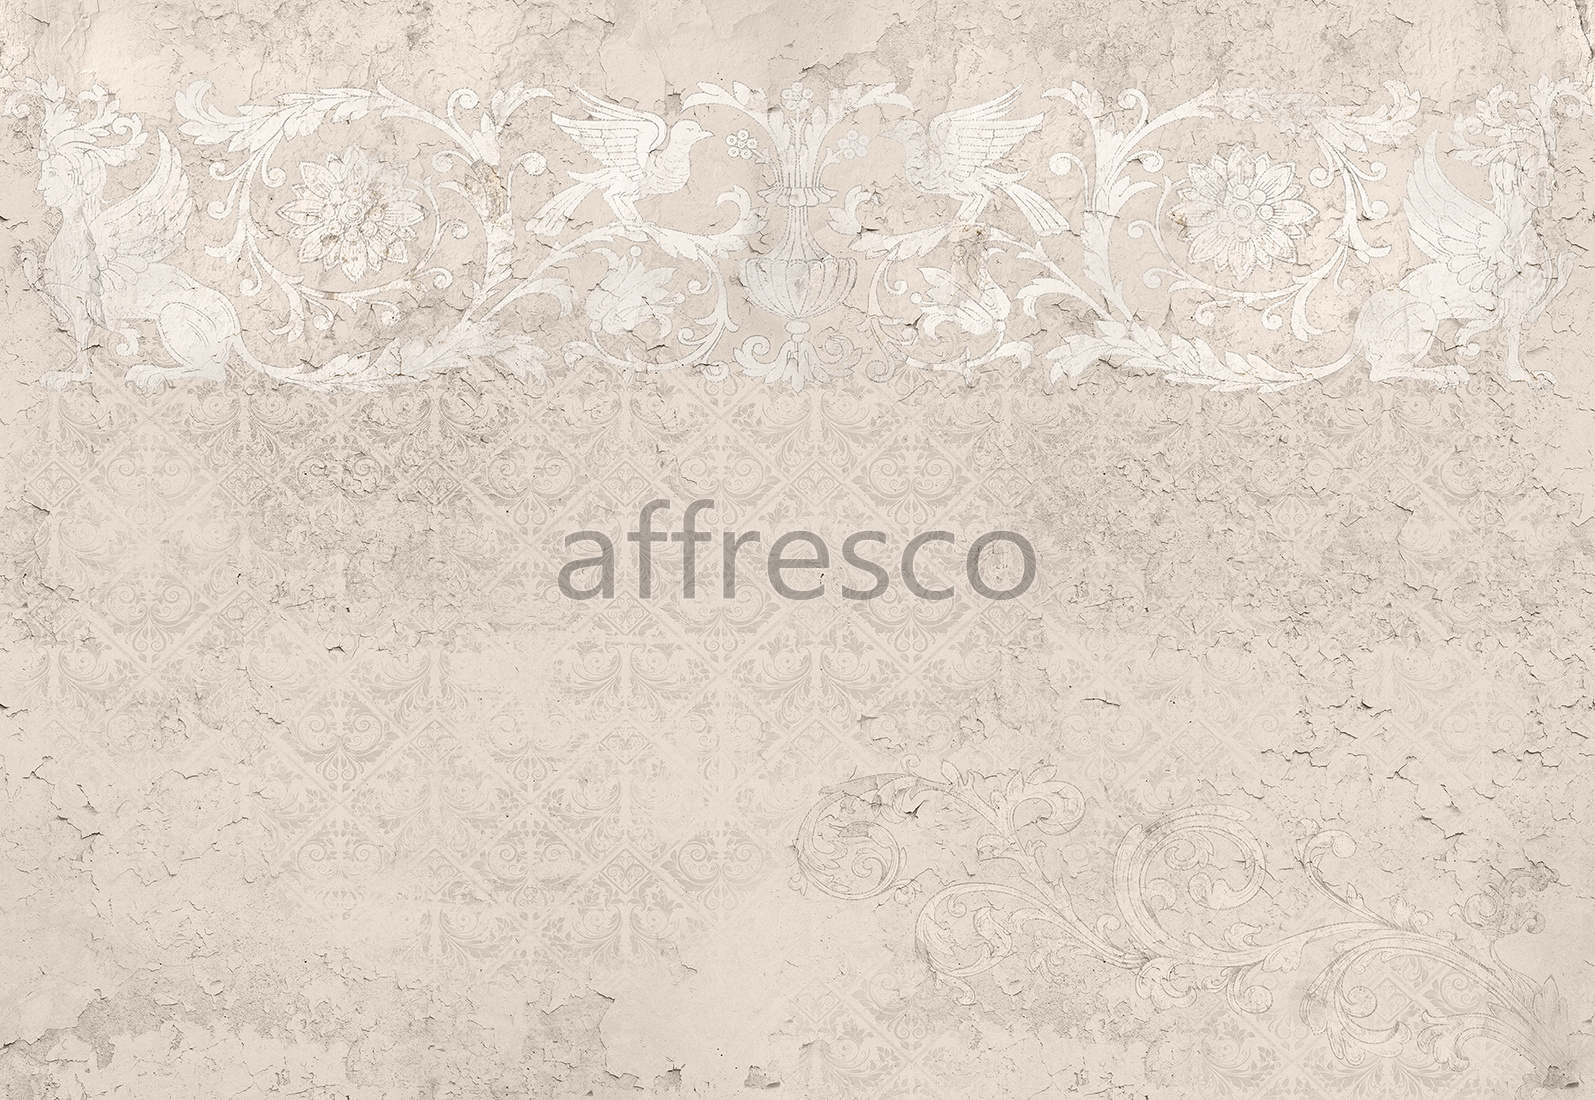 ID136199 | Textures |  | Affresco Factory